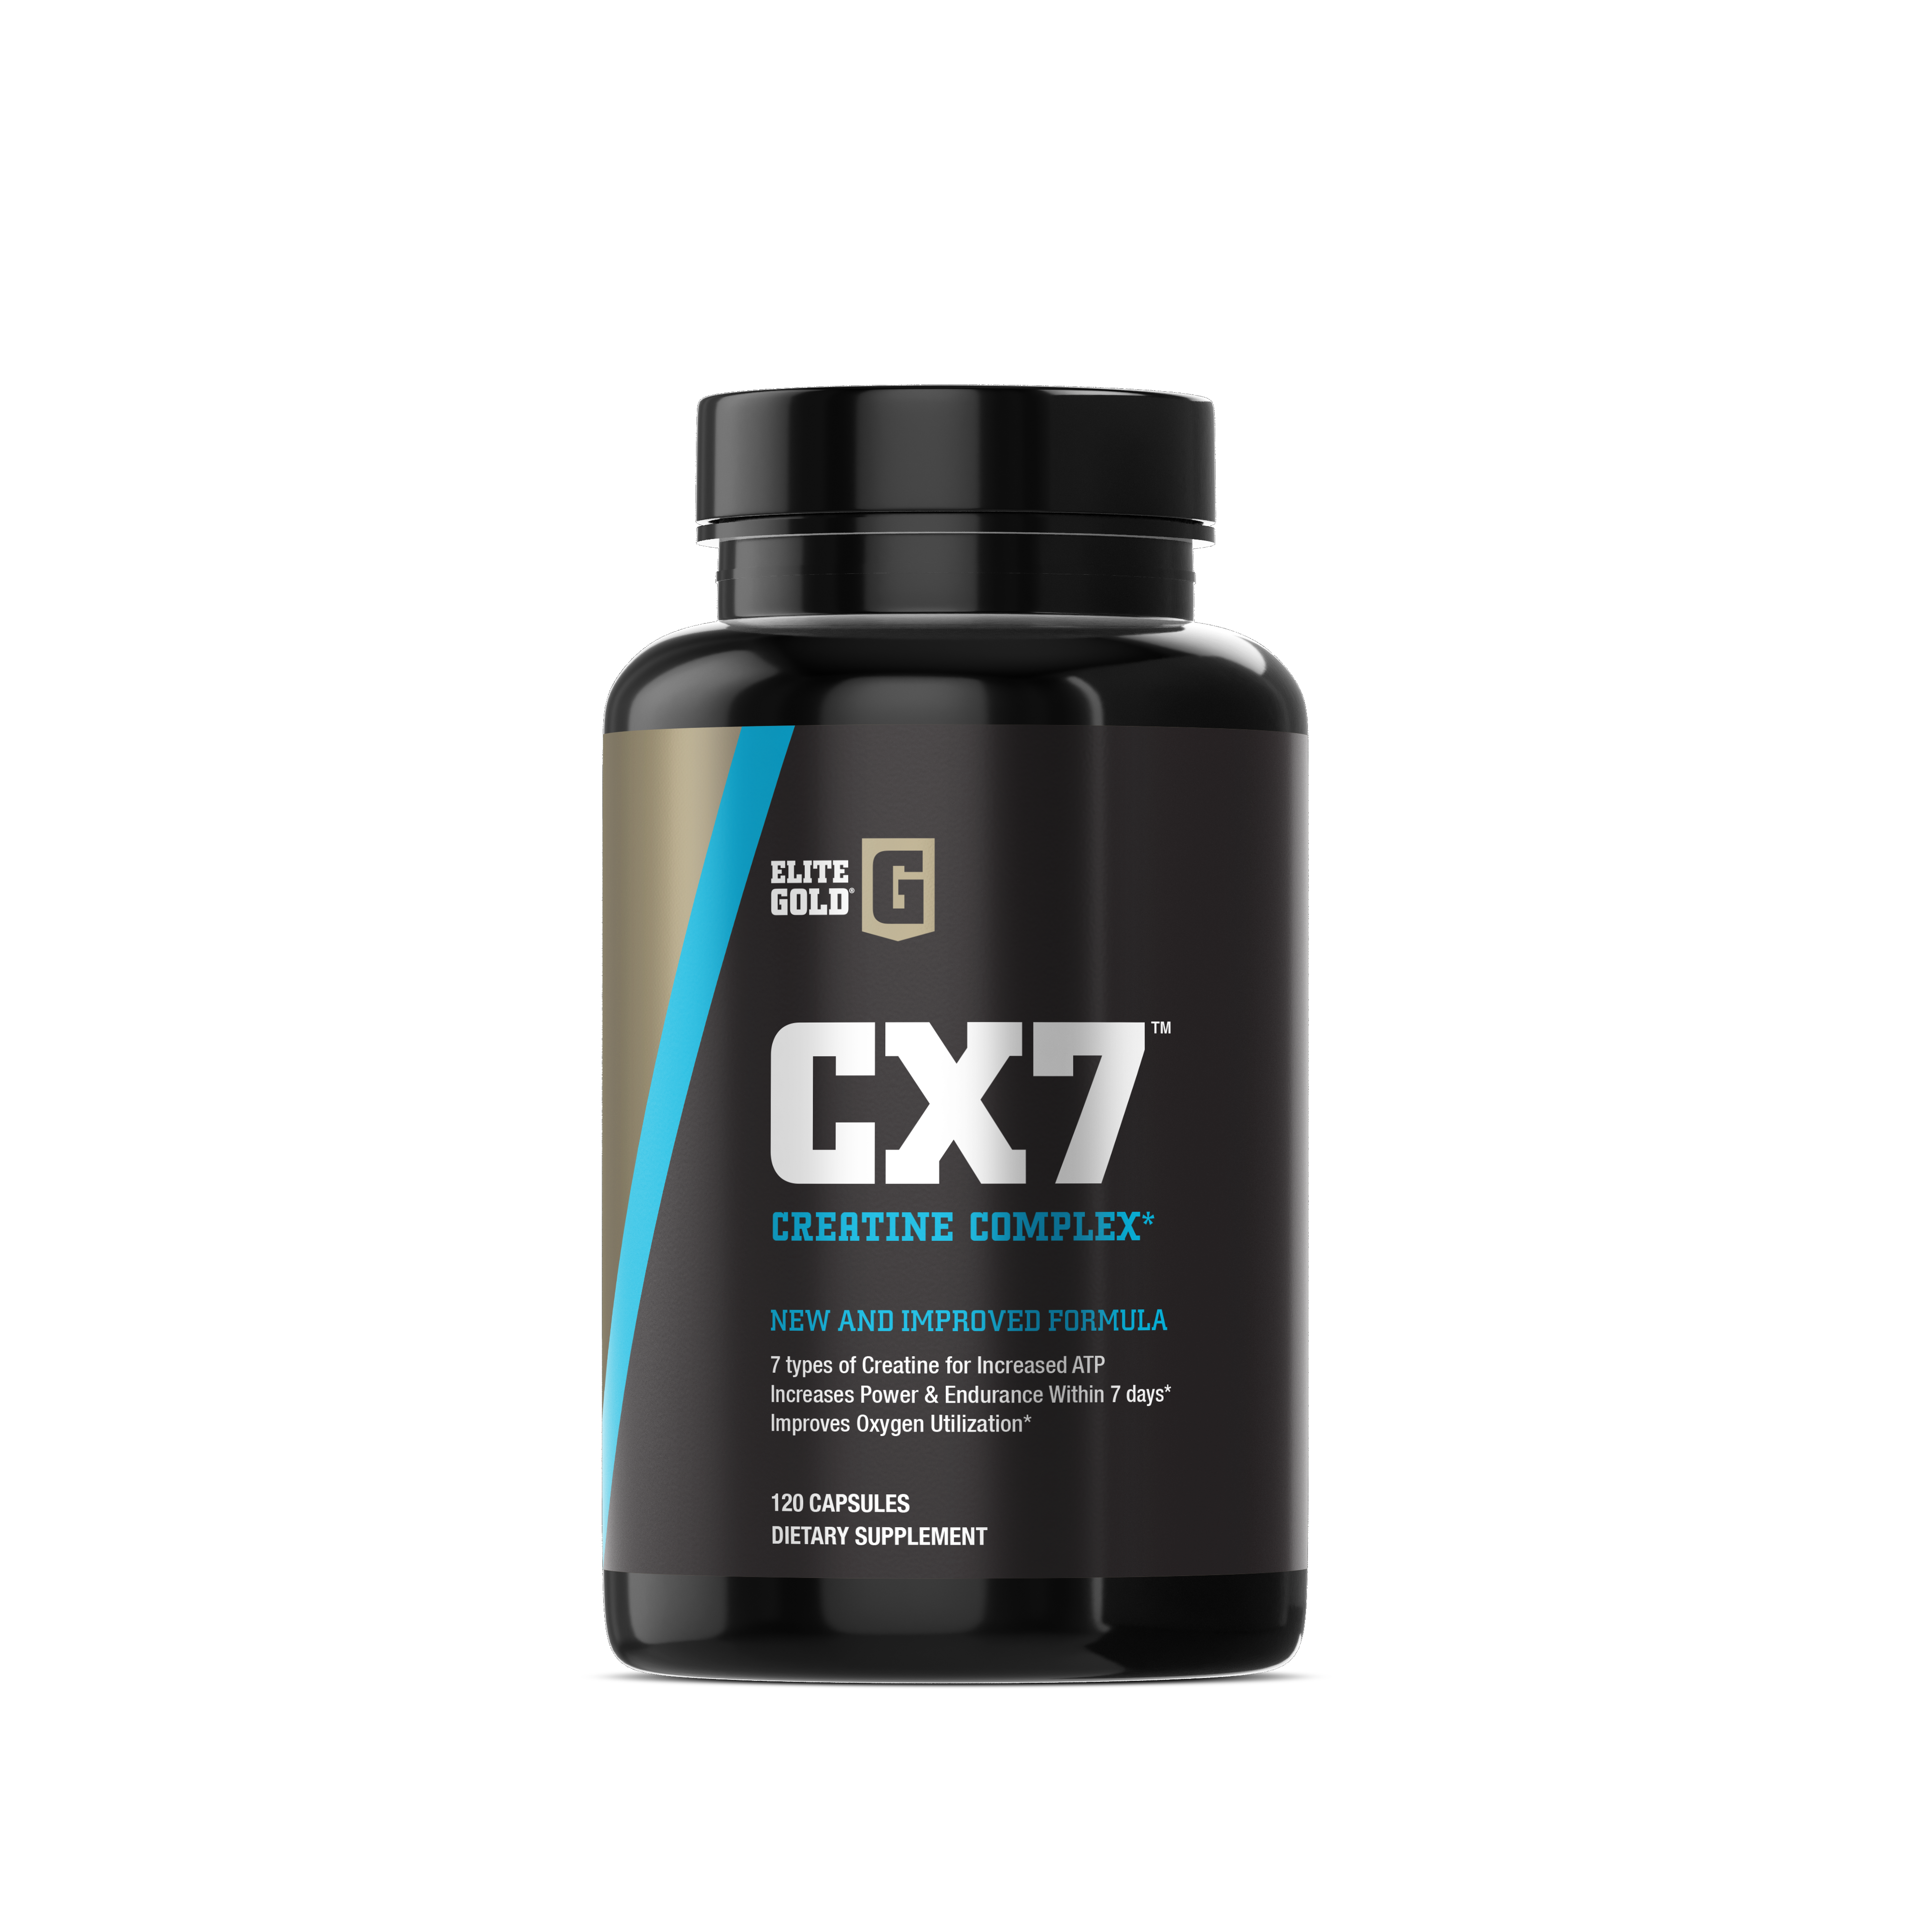 Elite Stack - NX6 & CX7